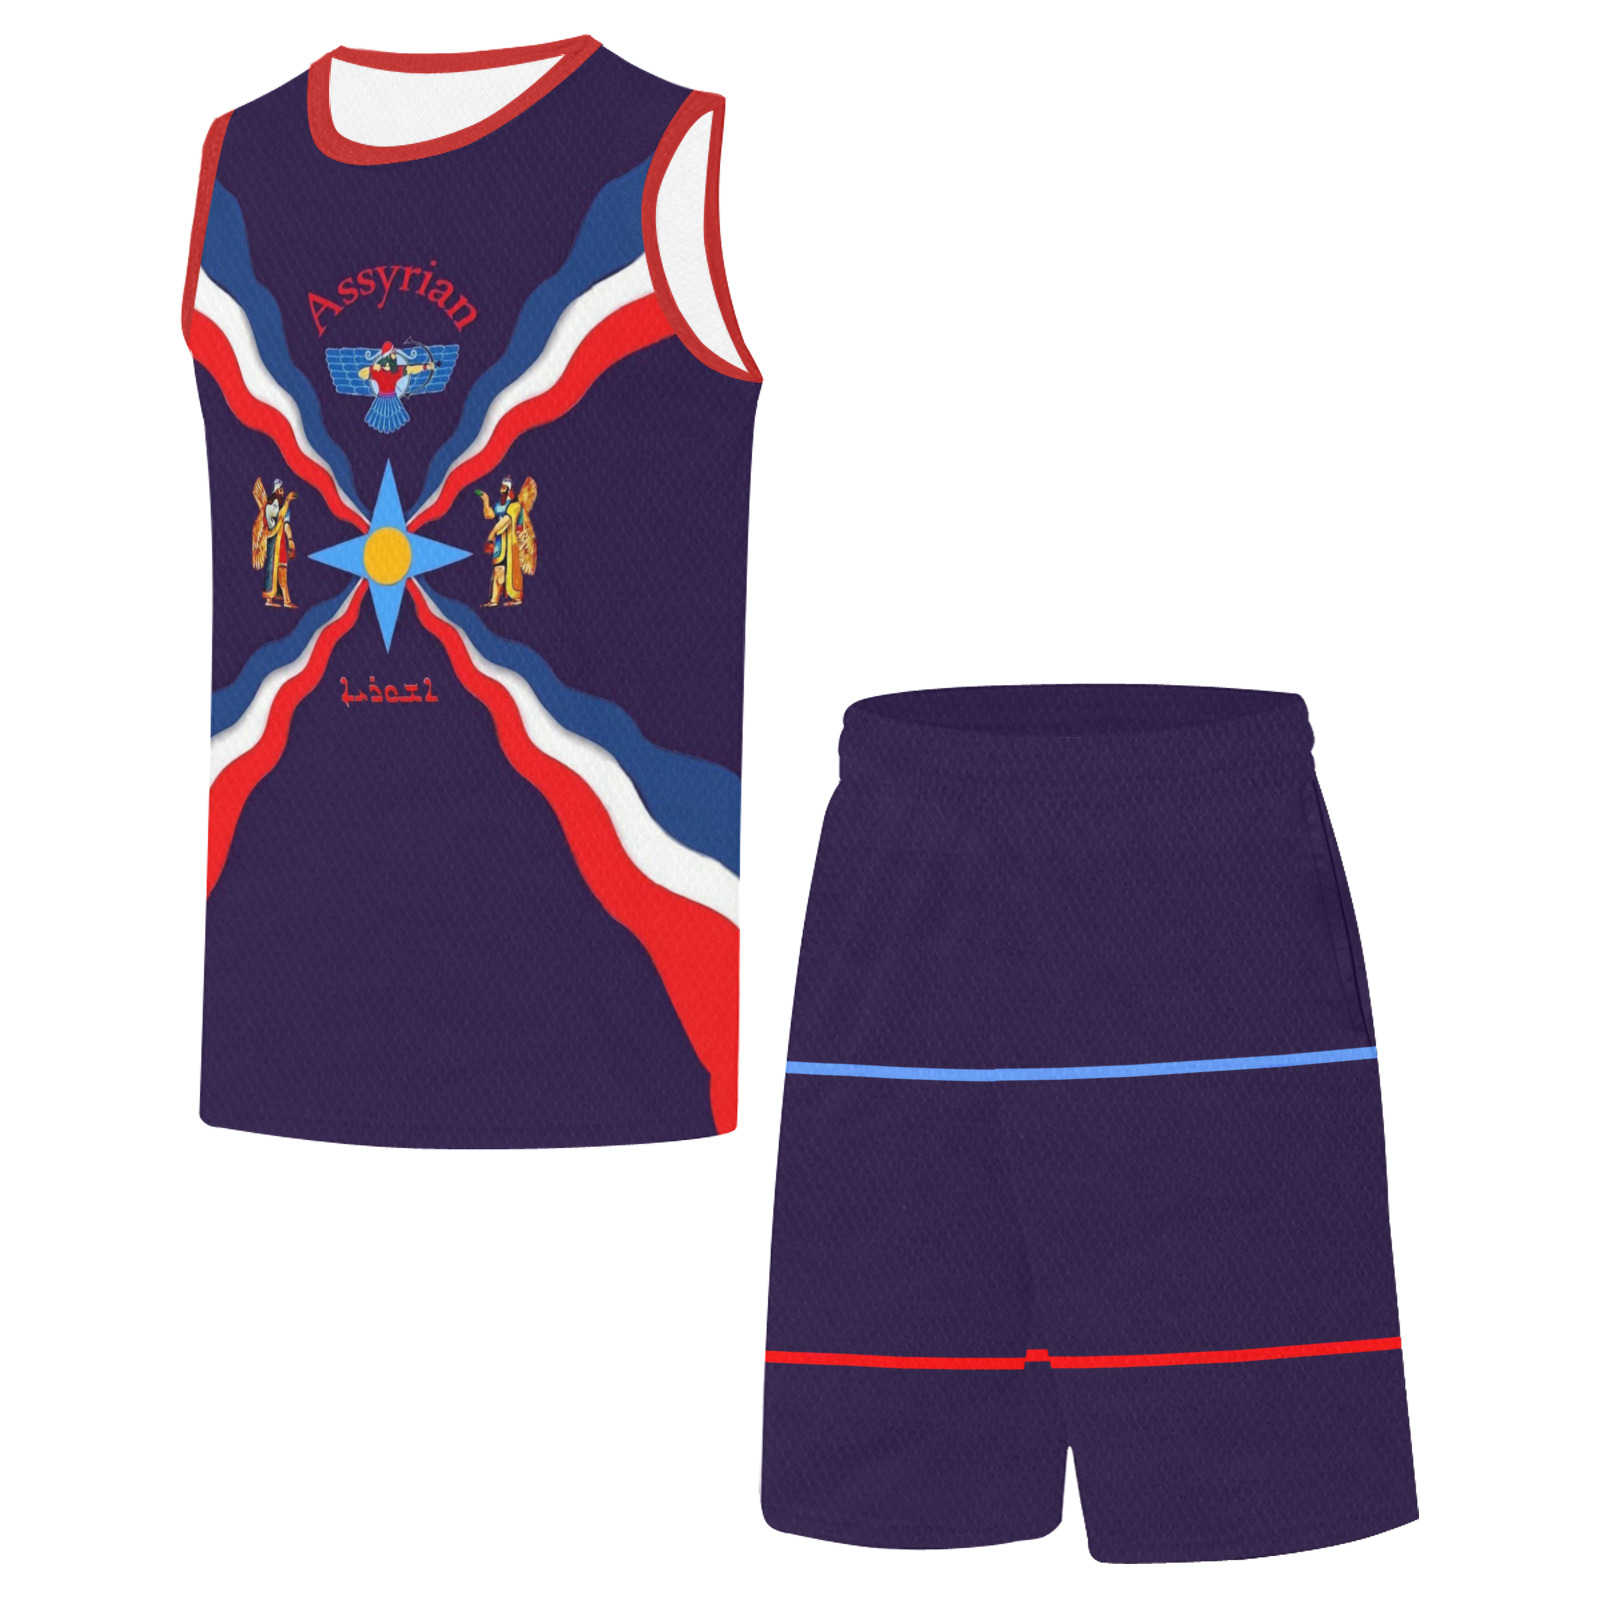 Assyrian Flag Basketball Uniform with Pocket